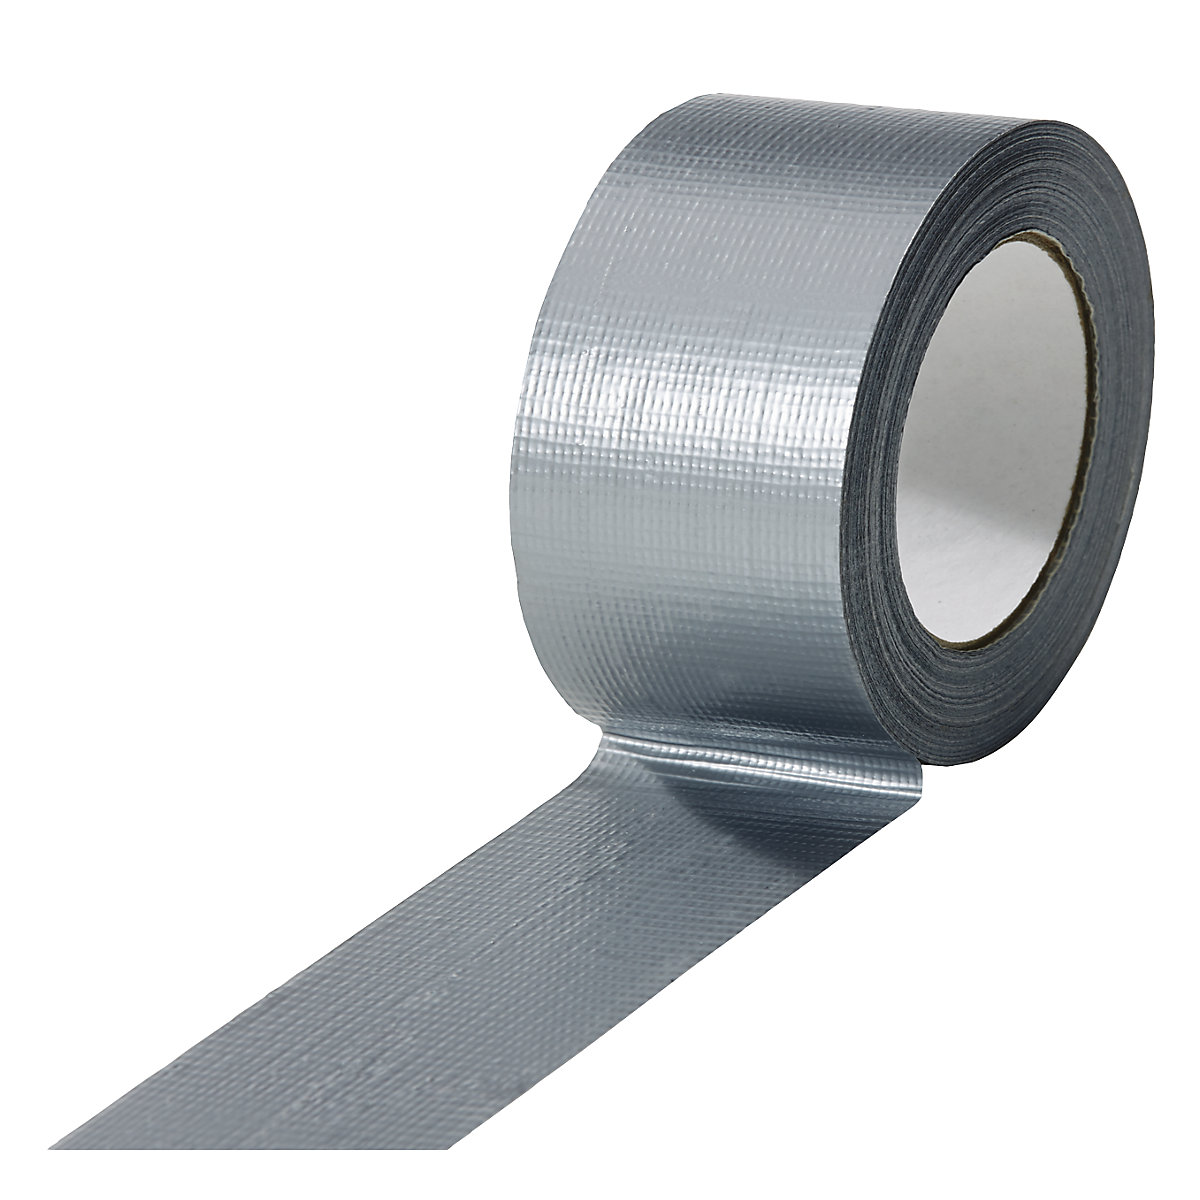 Tkaninová páska, v různých barvách, bal.j. 18 rolí, stříbrná, šířka pásky 50 mm-12